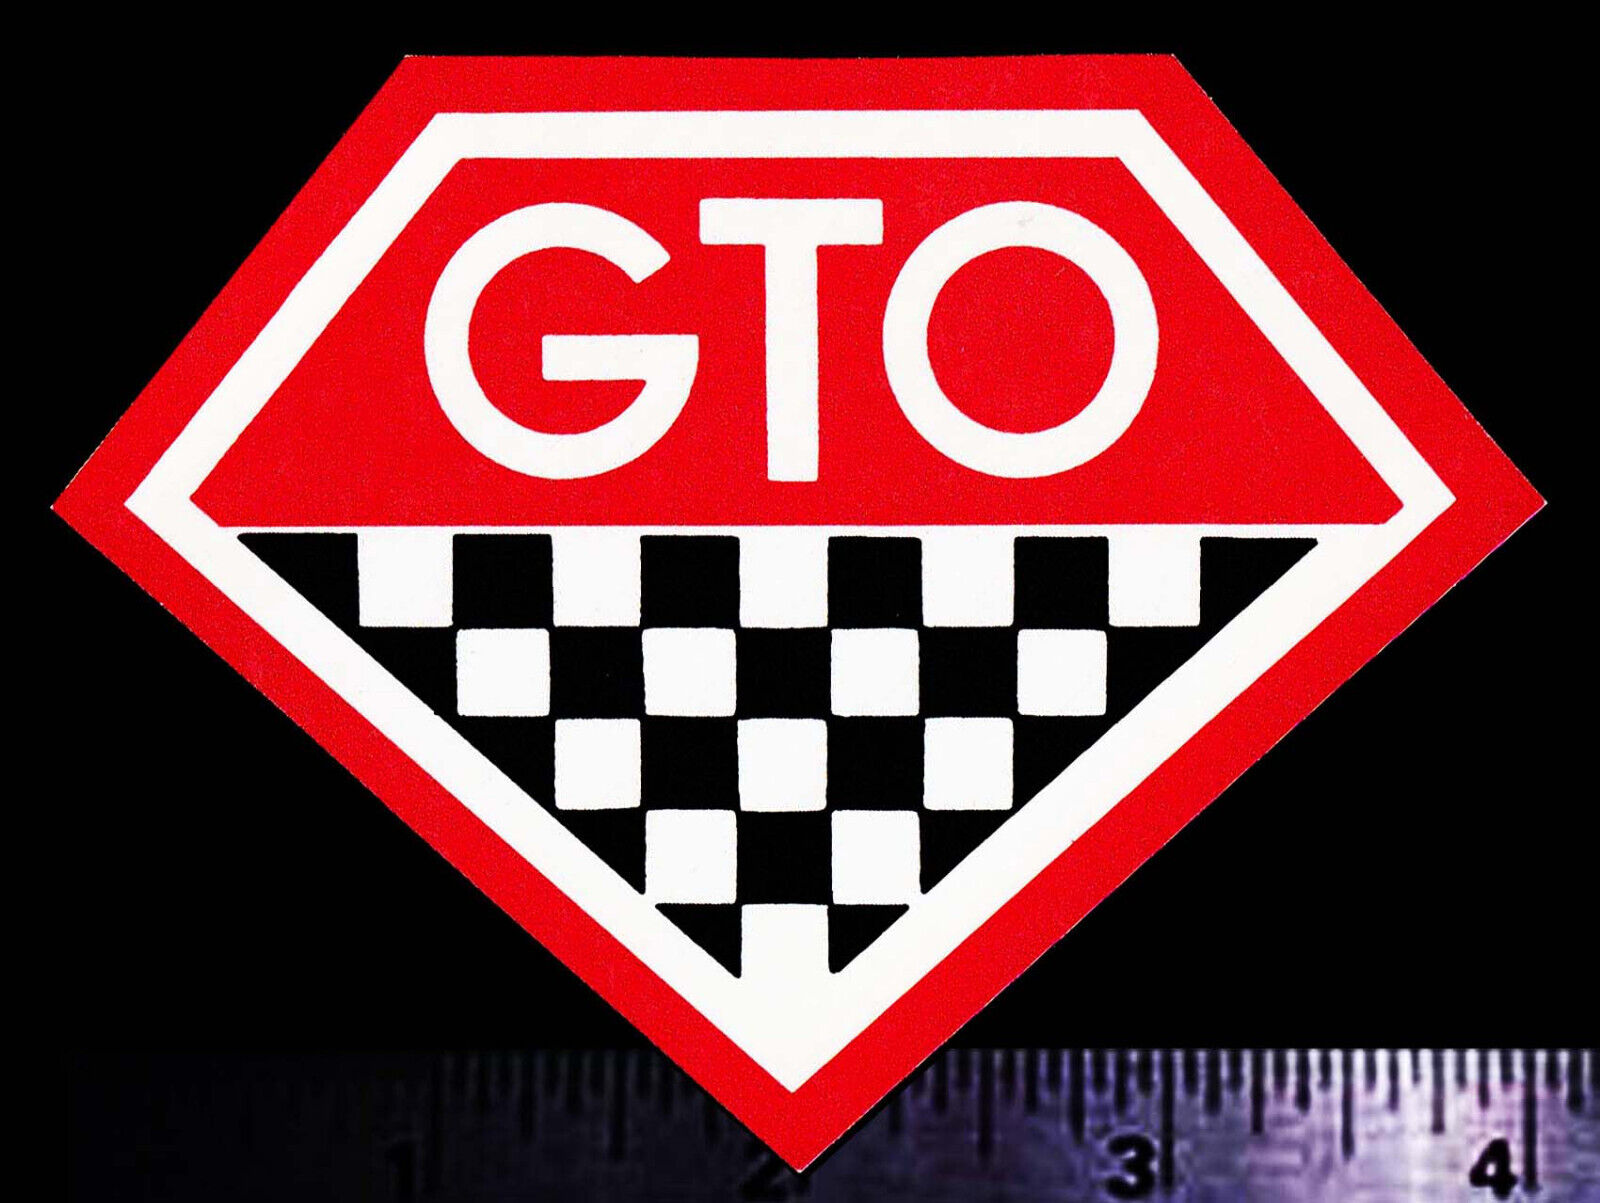 PONTIAC GTO - Original Vintage 1960's 70's Racing Decal/Sticker THE JUDGE